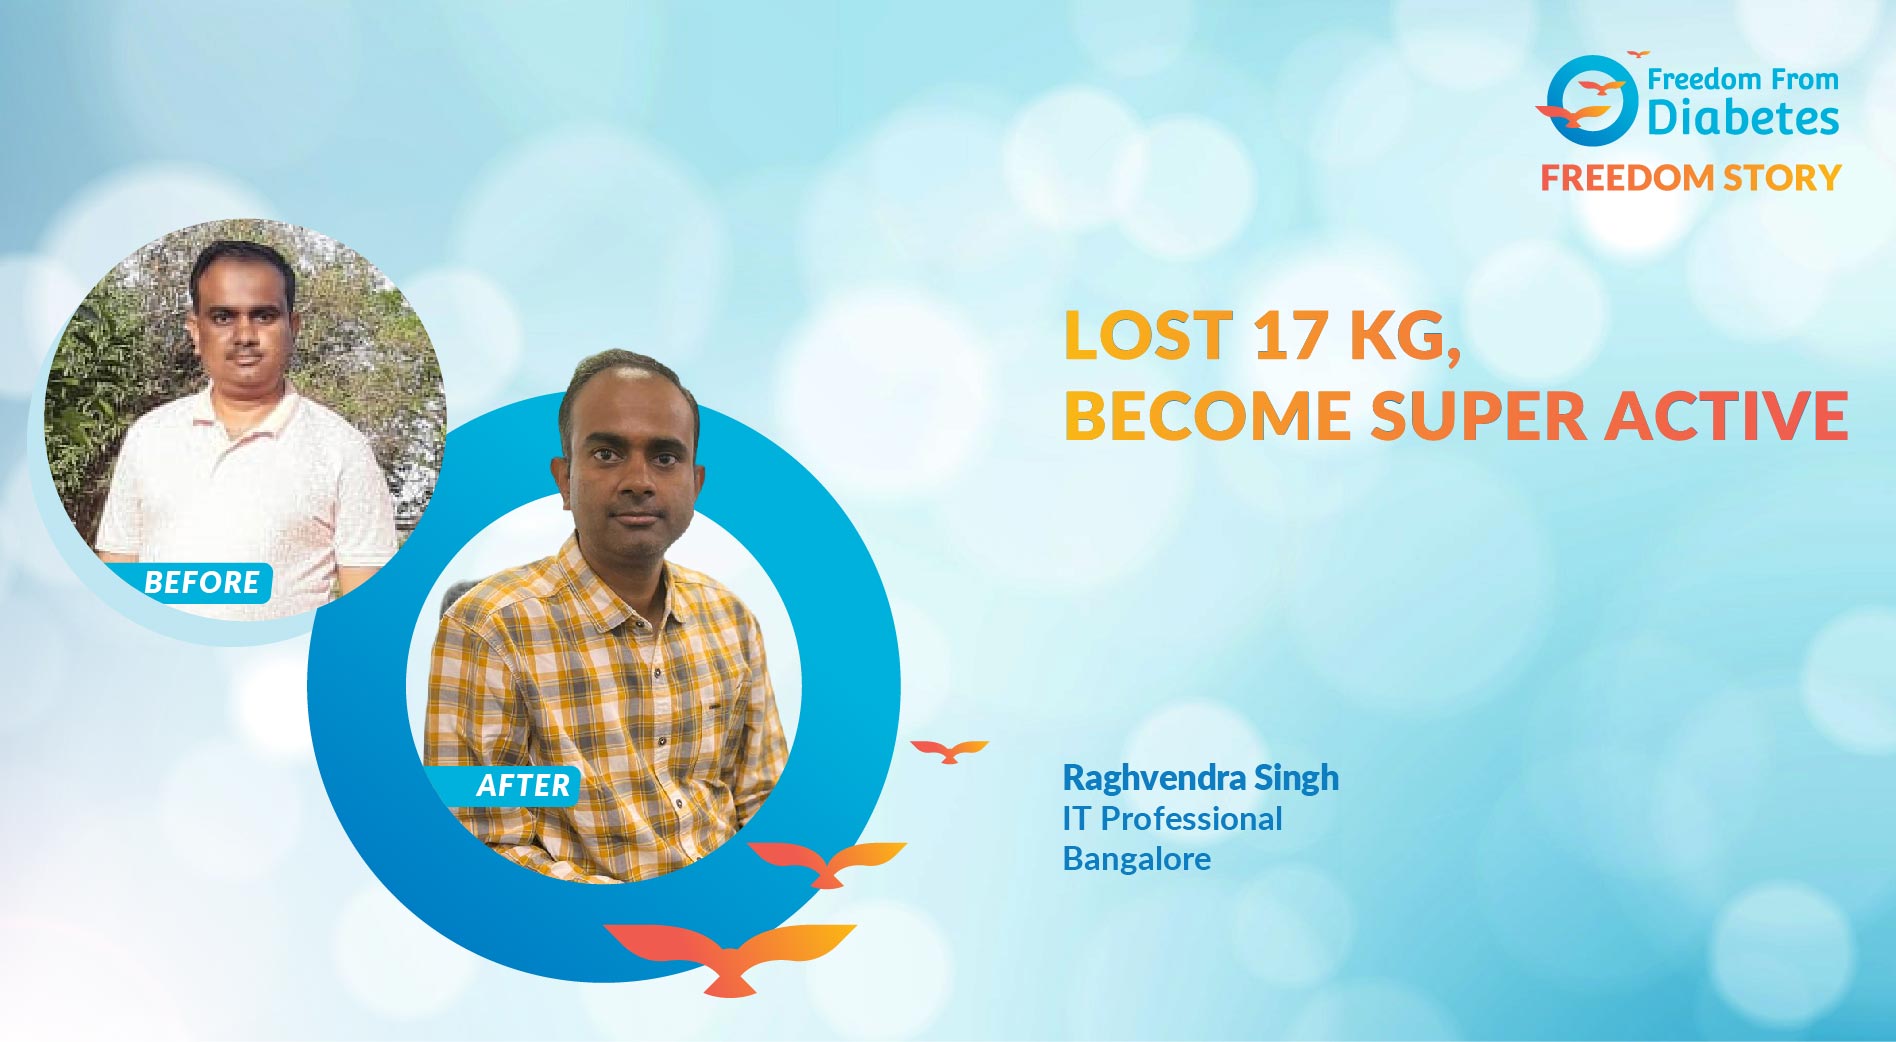 Raghvendra Singh: An extraordinary weight loss story